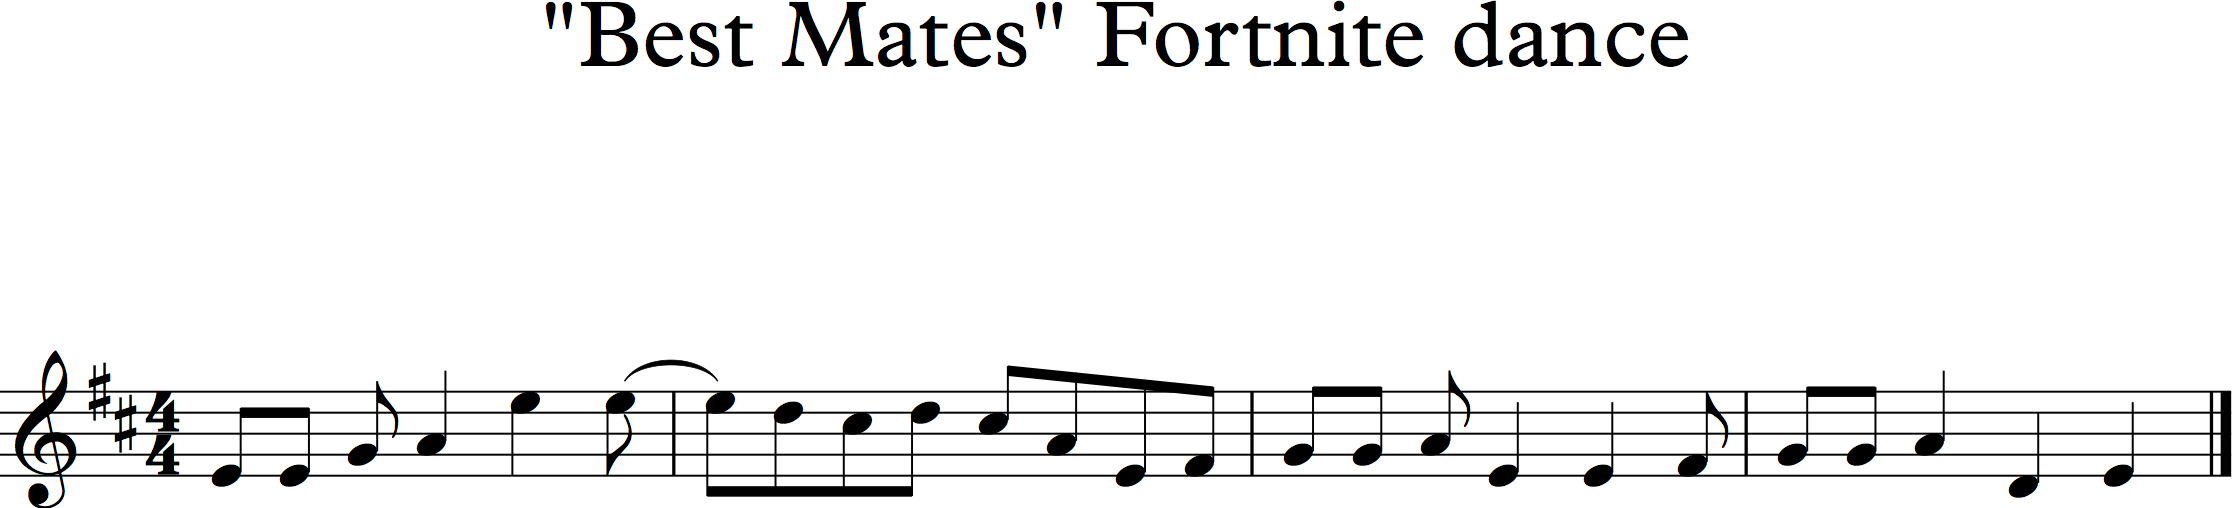 Fortnite Default Dance Sheet Music Piano